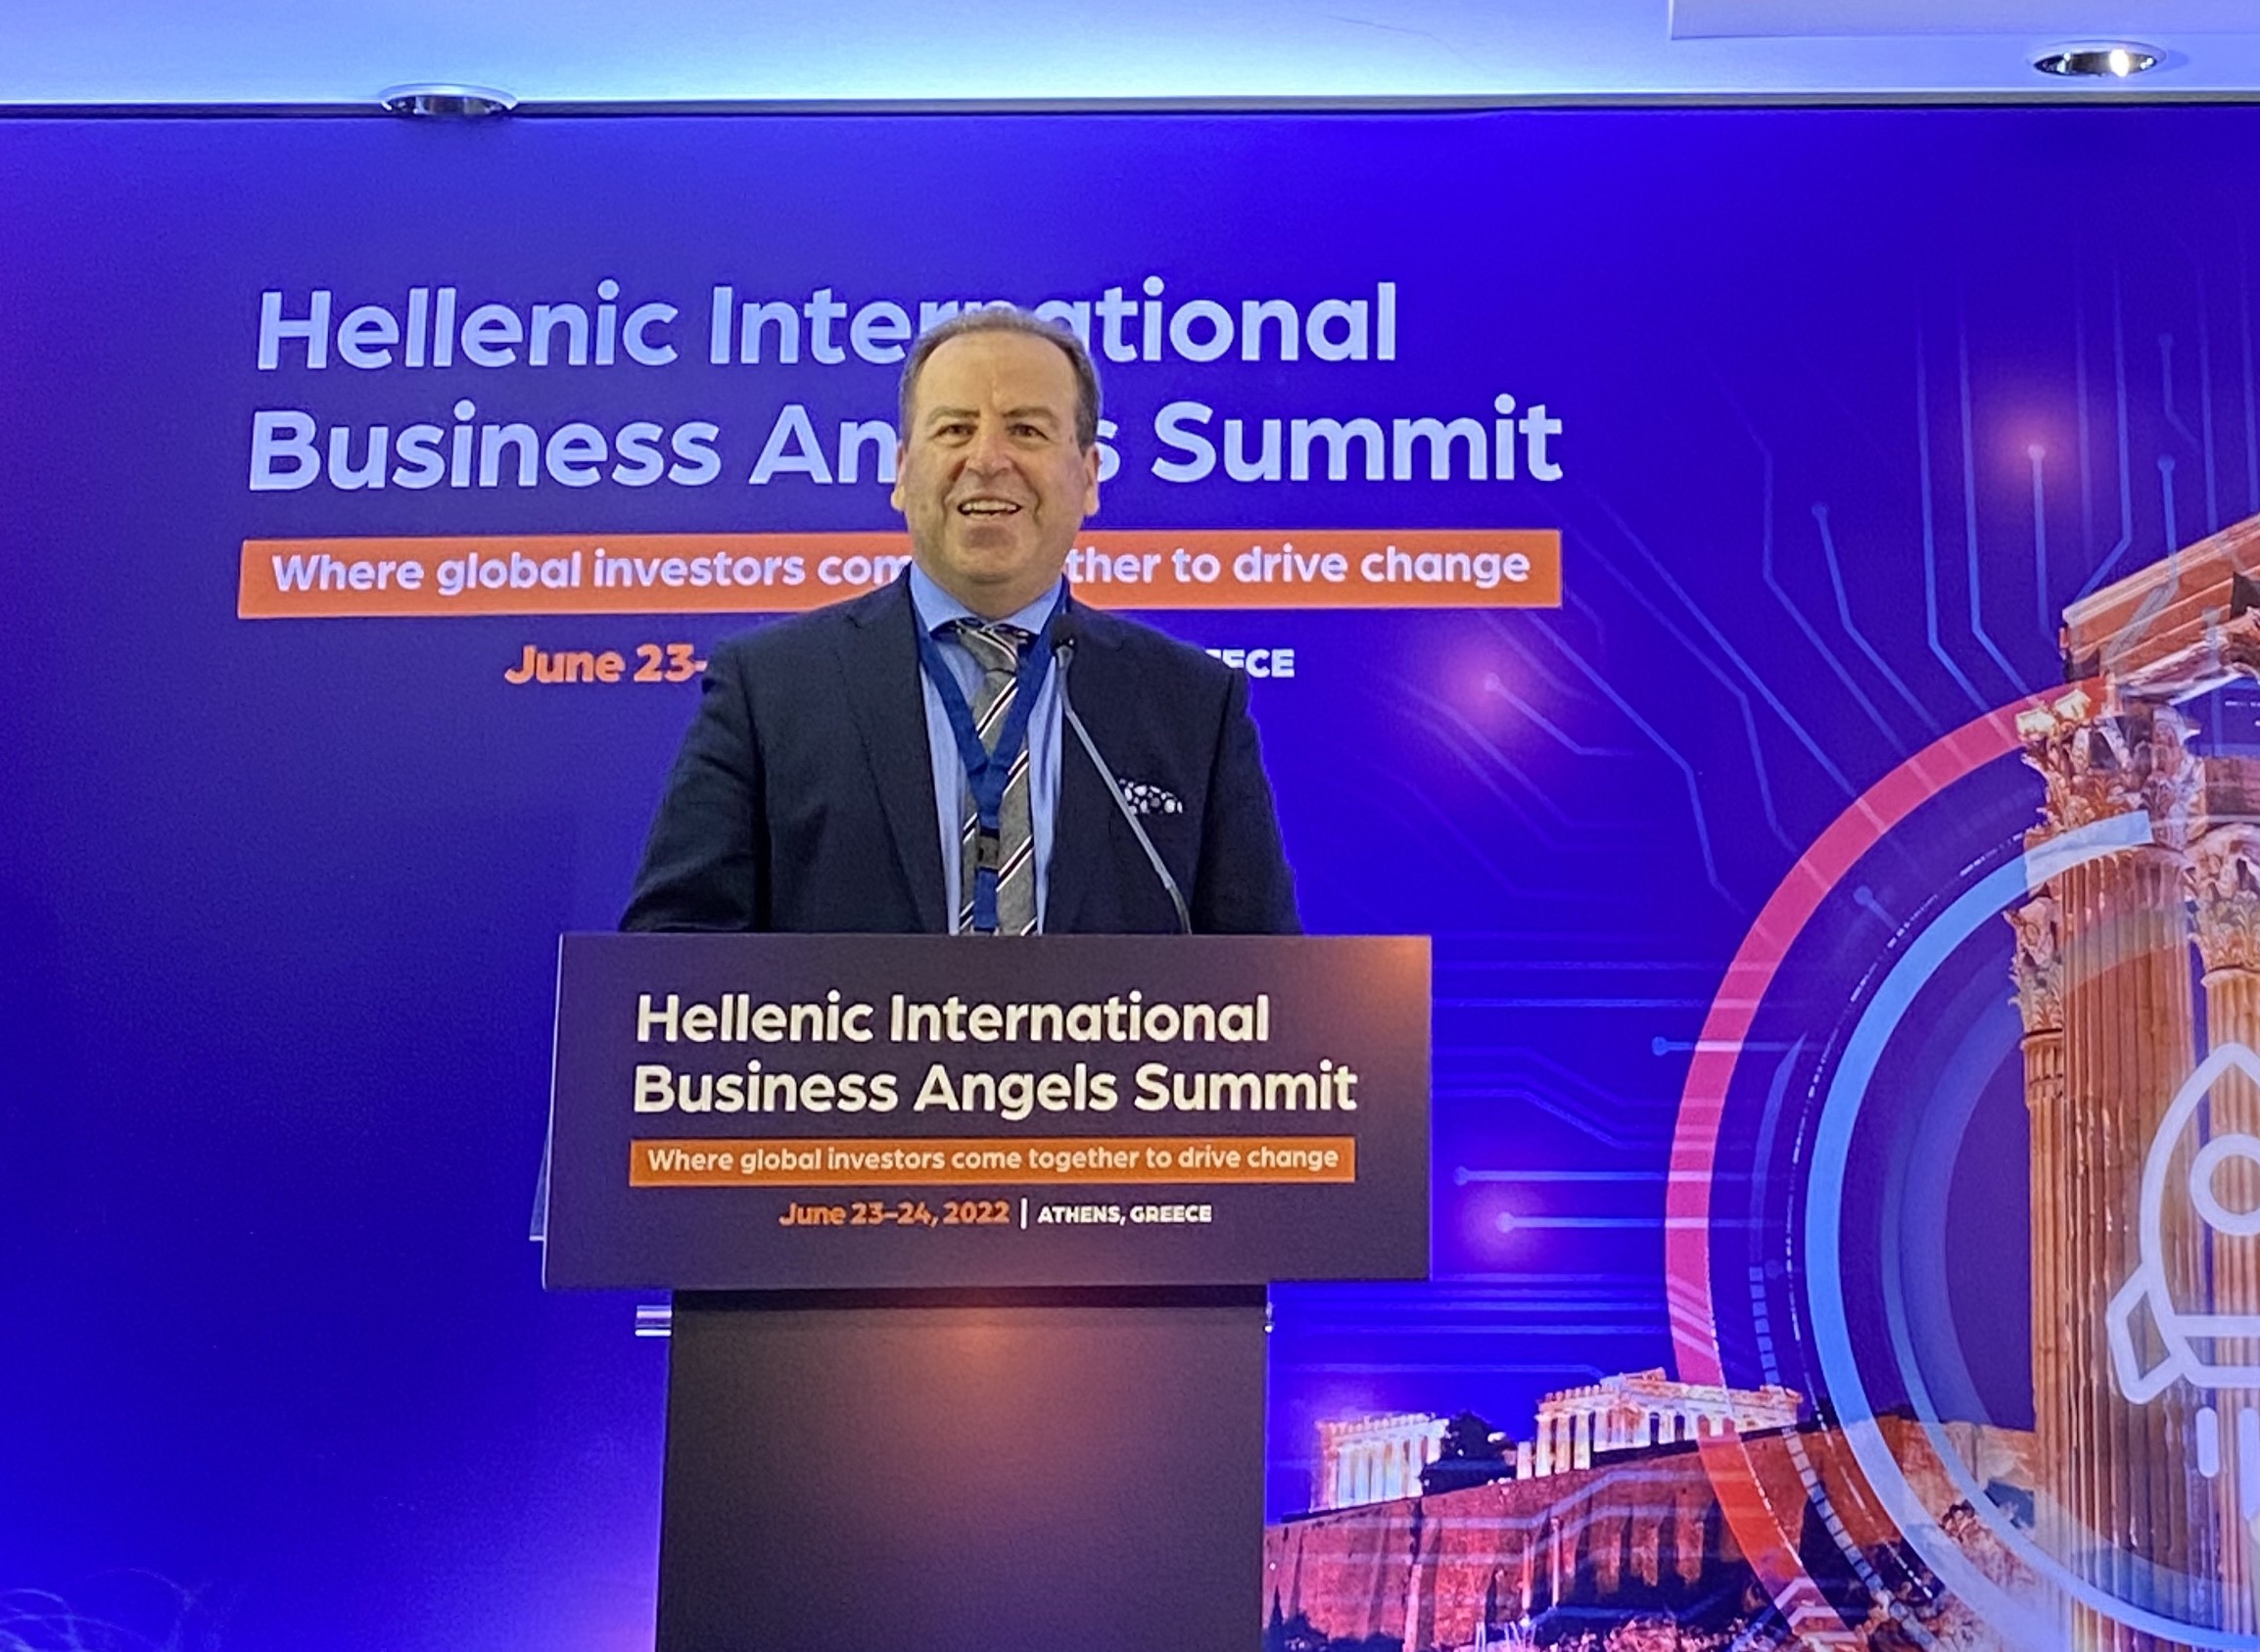 Prof. Ketikidis among the organisers of the Hellenic International Business Angels Summit